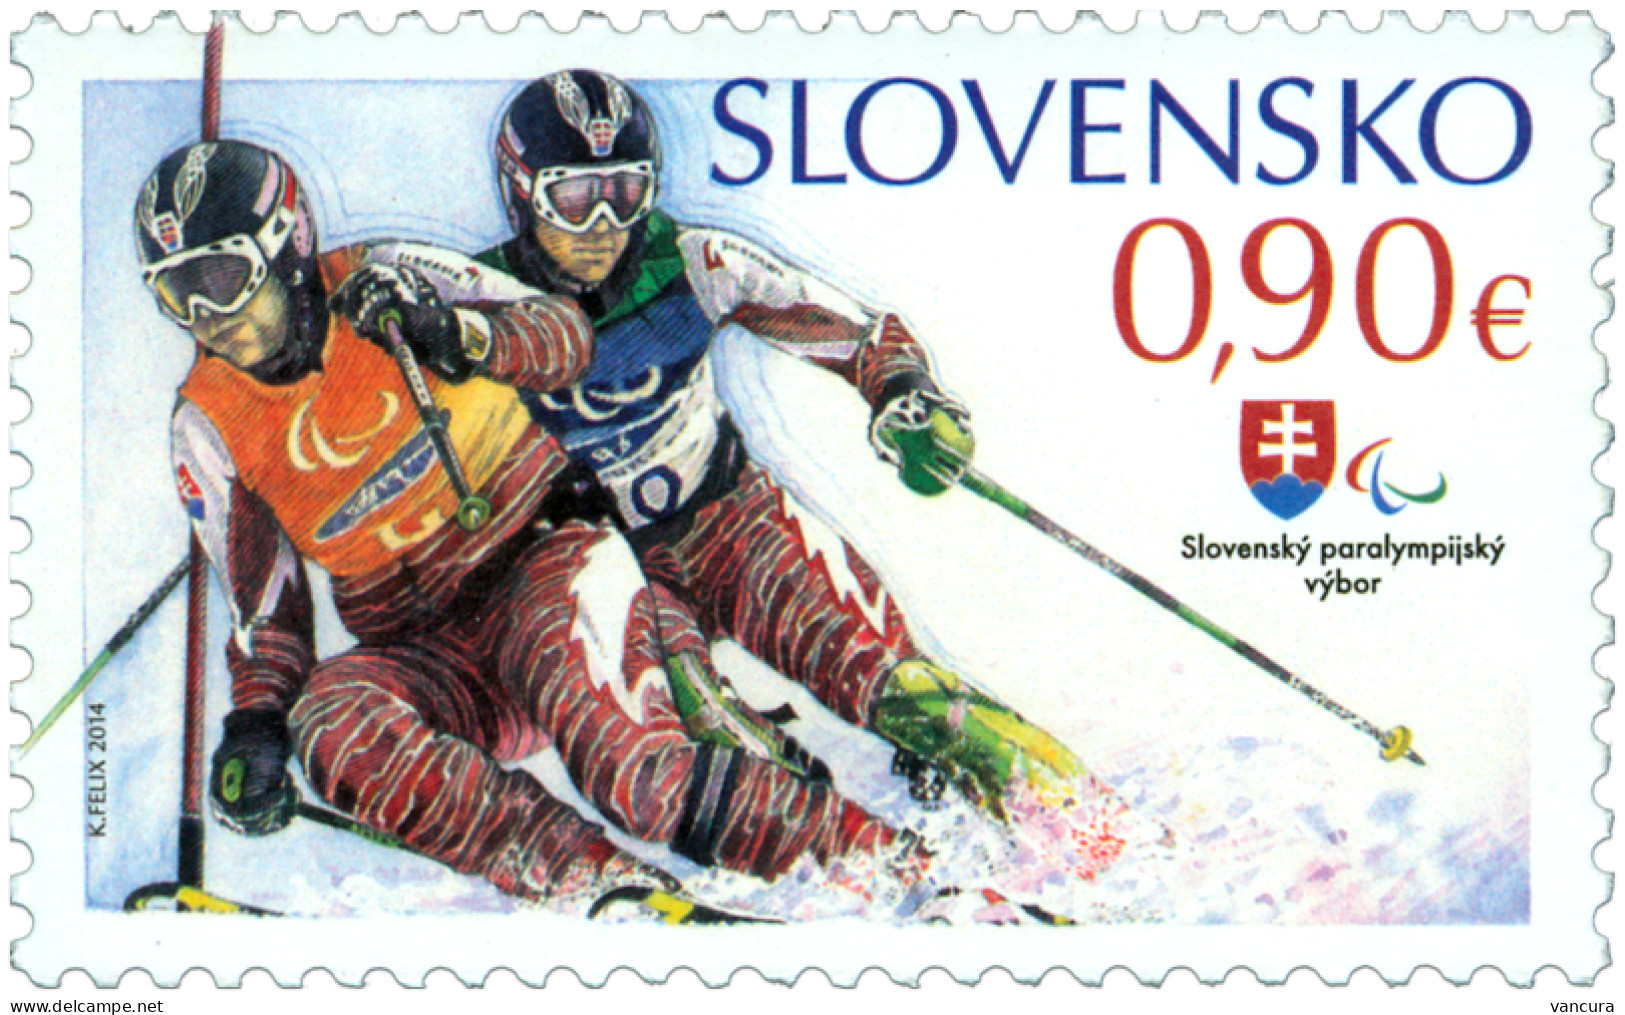 557 Slovakia Winter Paralympic Games Sotchi 2014 Skiing - Winter 2014: Sochi